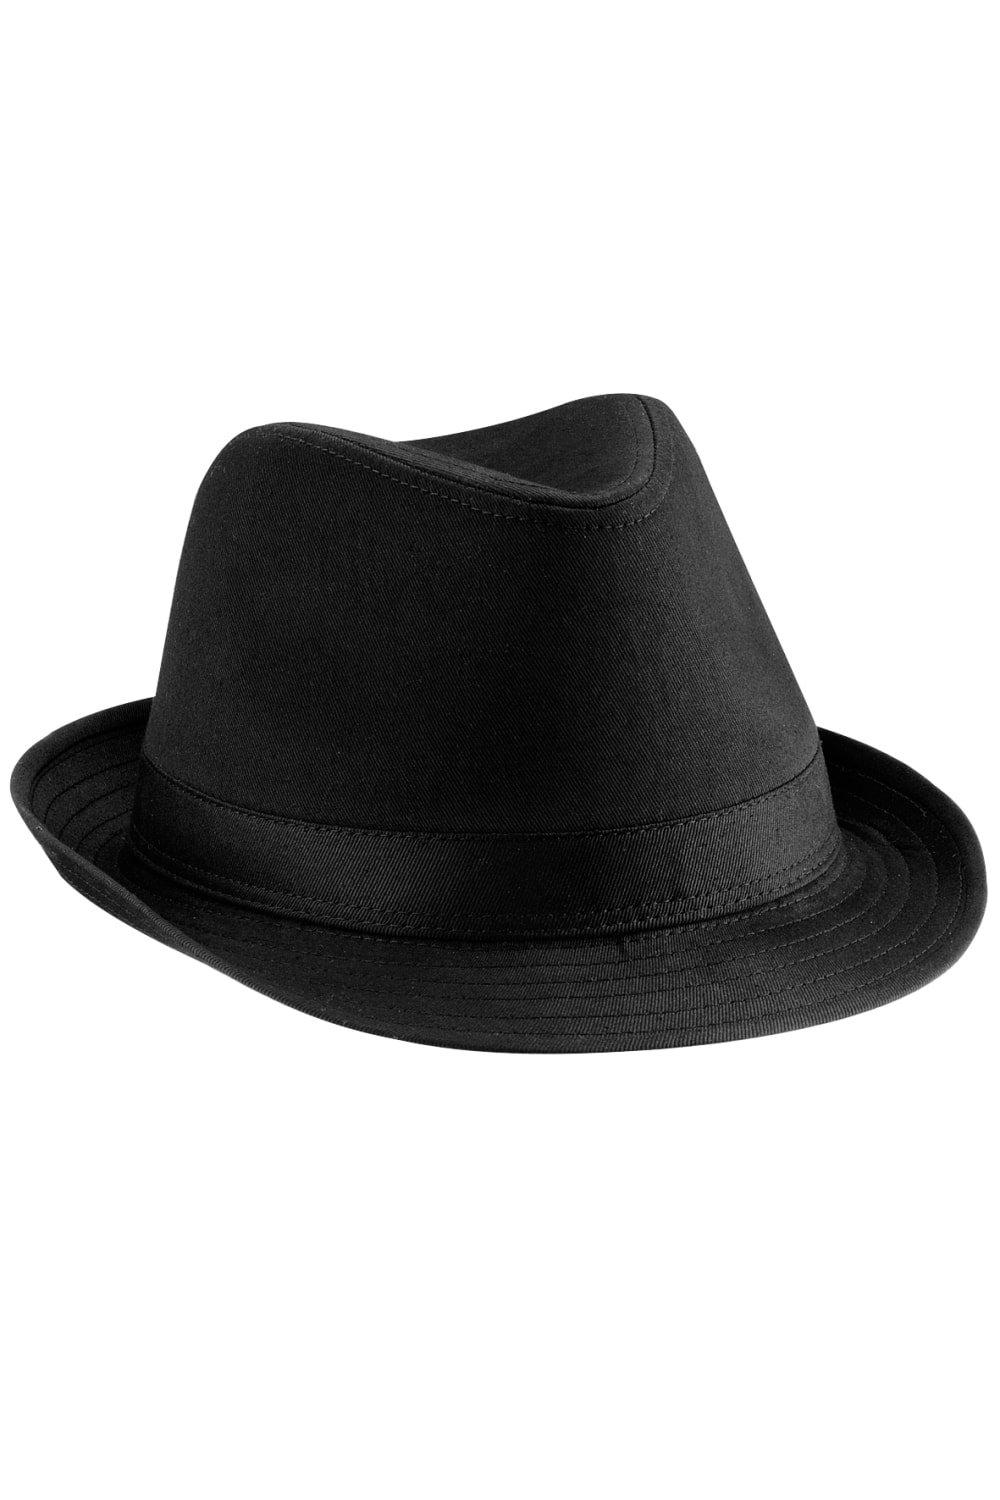 шляпа Федора Beechfield, черный